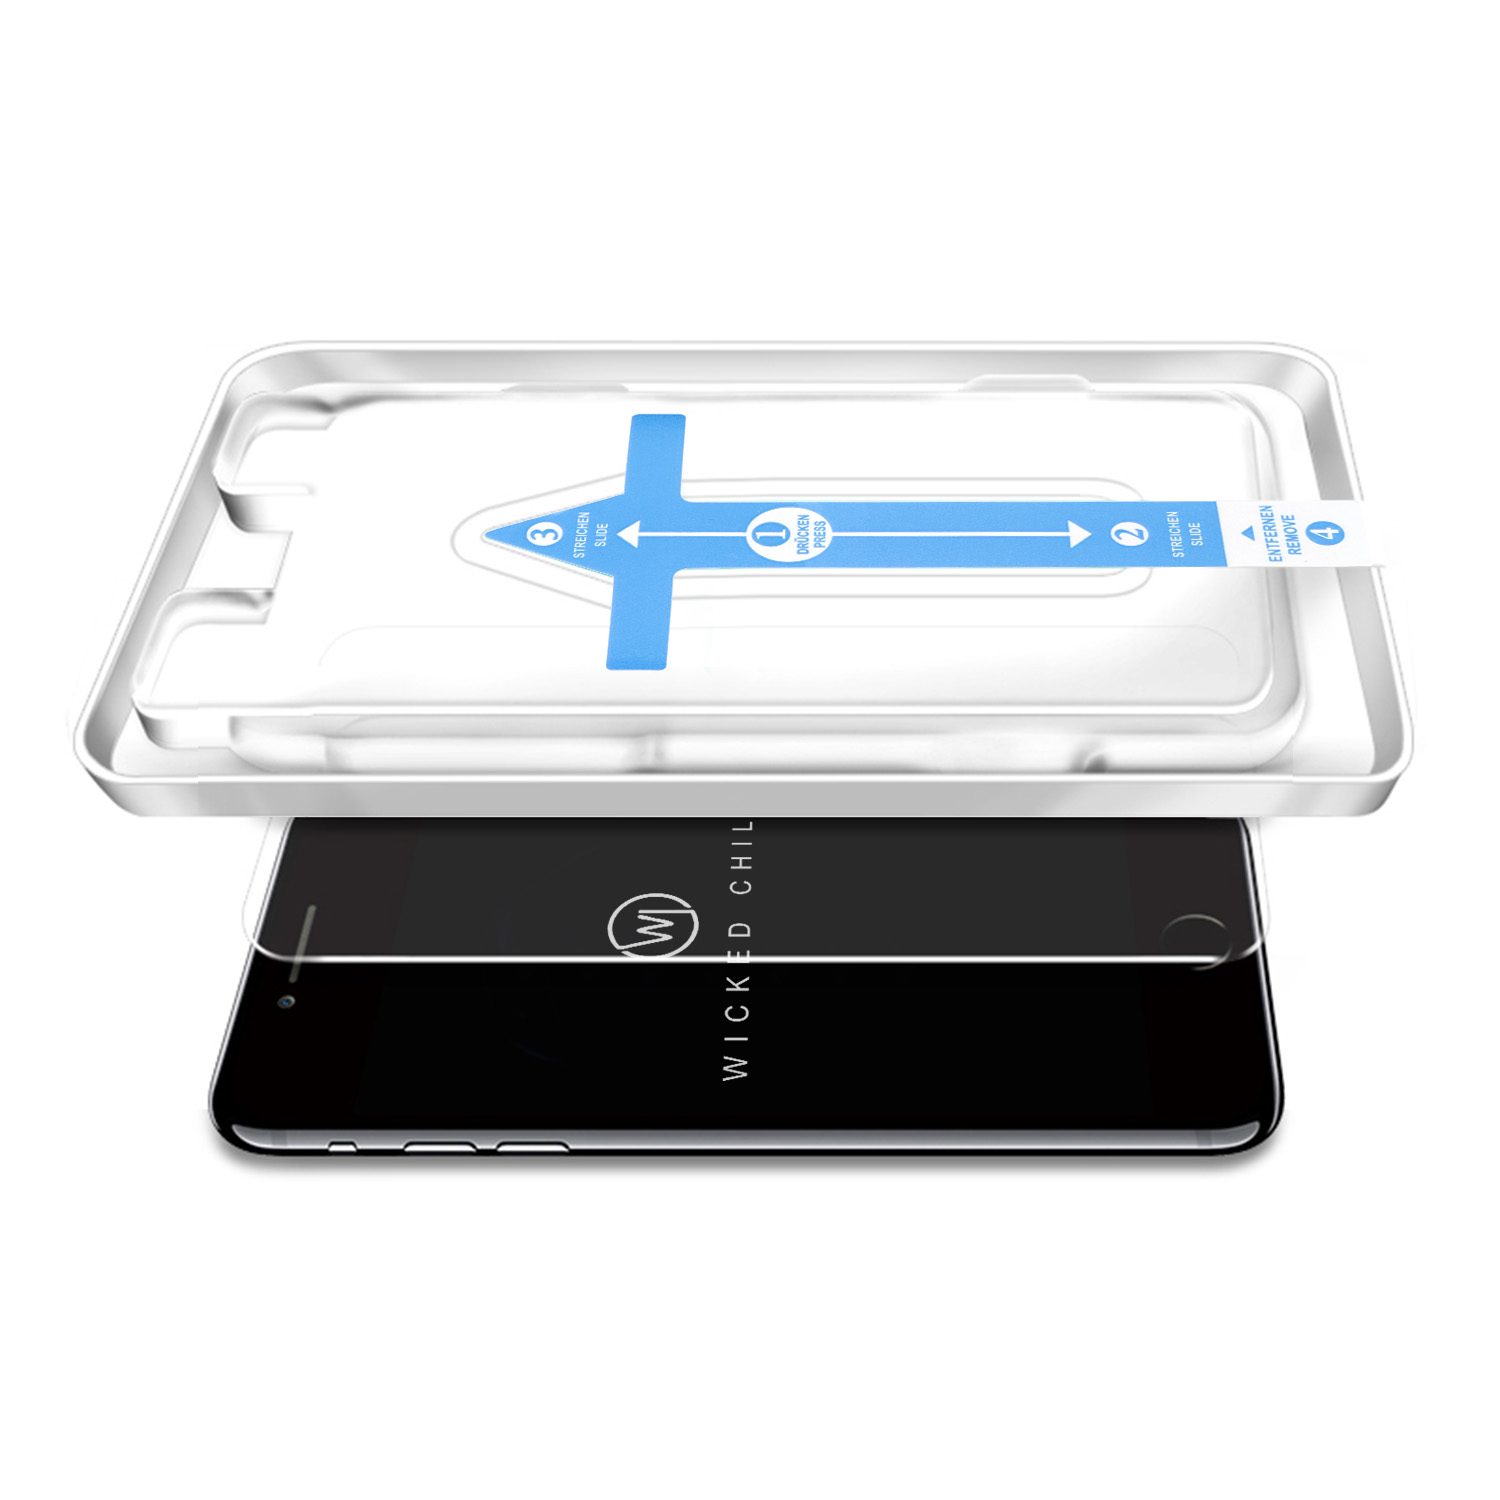 WICKED CHILI 2X 6, iPhone 7, Easy-In iPhone 8, 6S) Apple iPhone iPhone Schutzglas(für